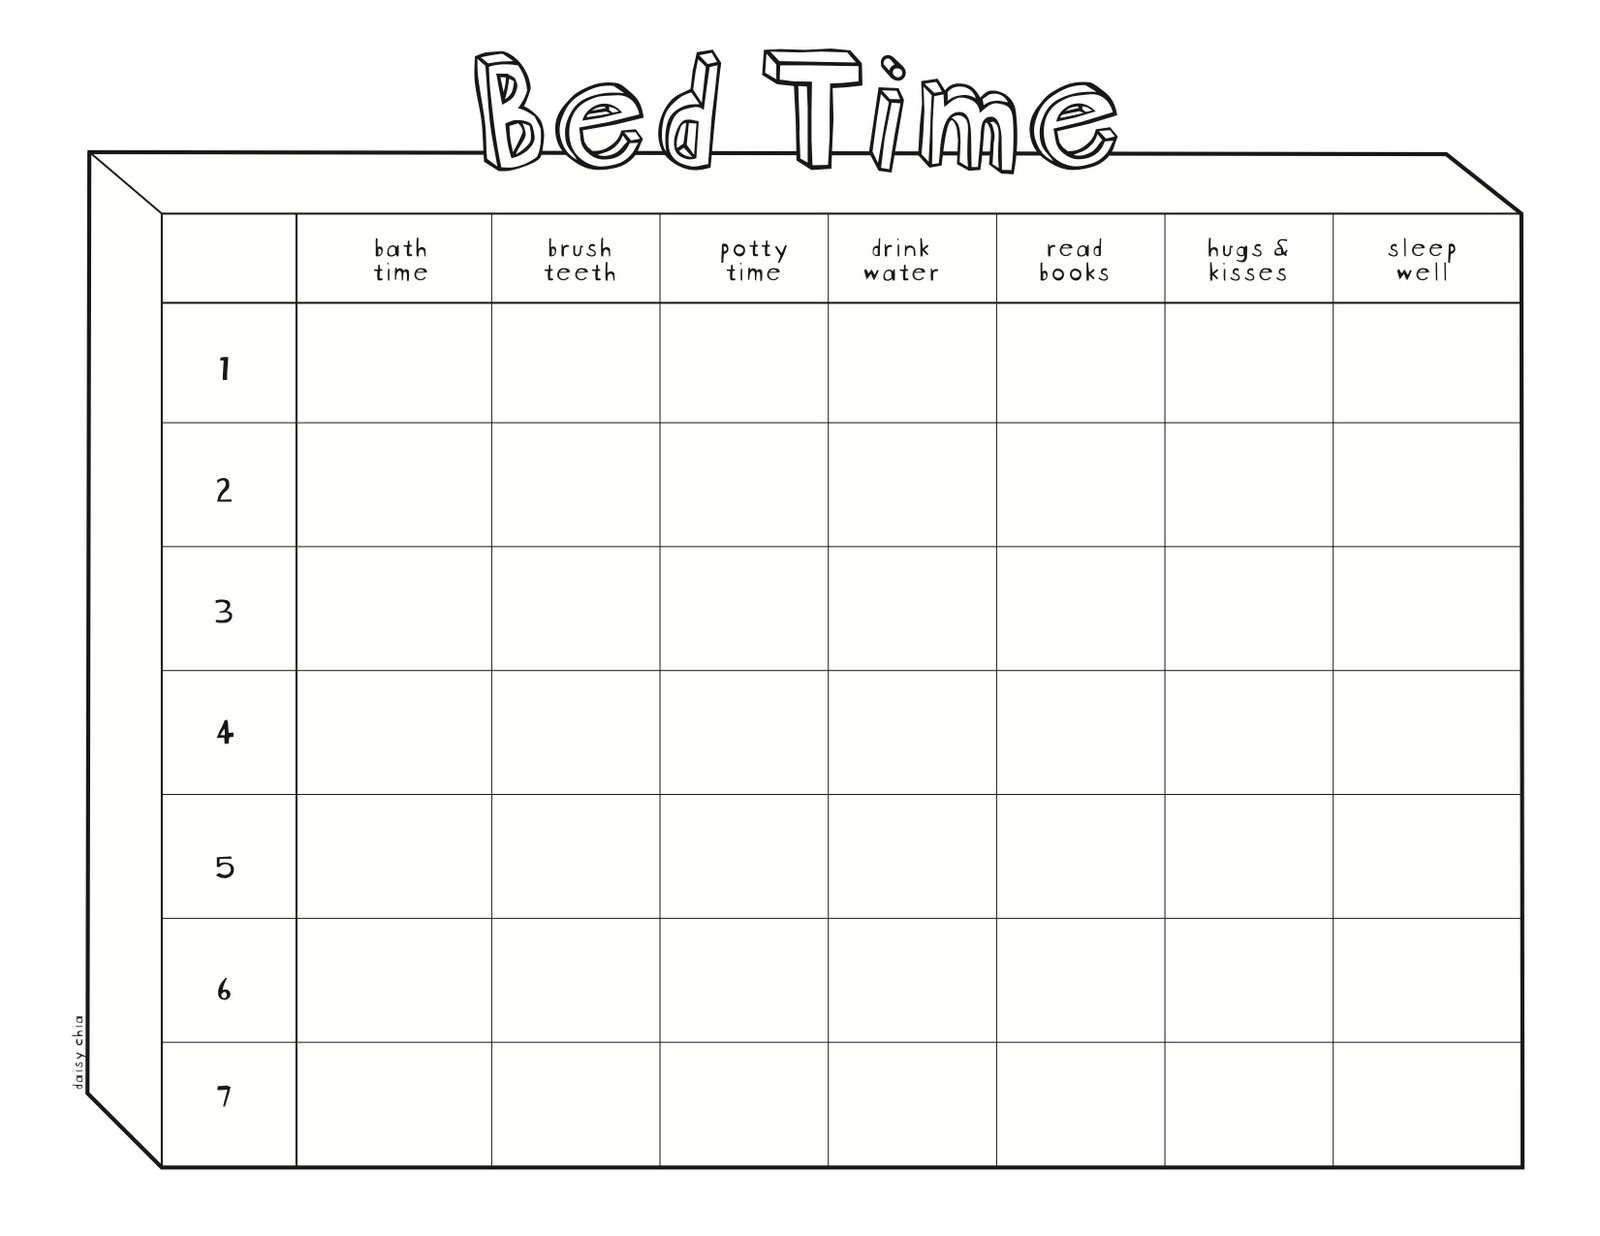 bedtime-reward-charts